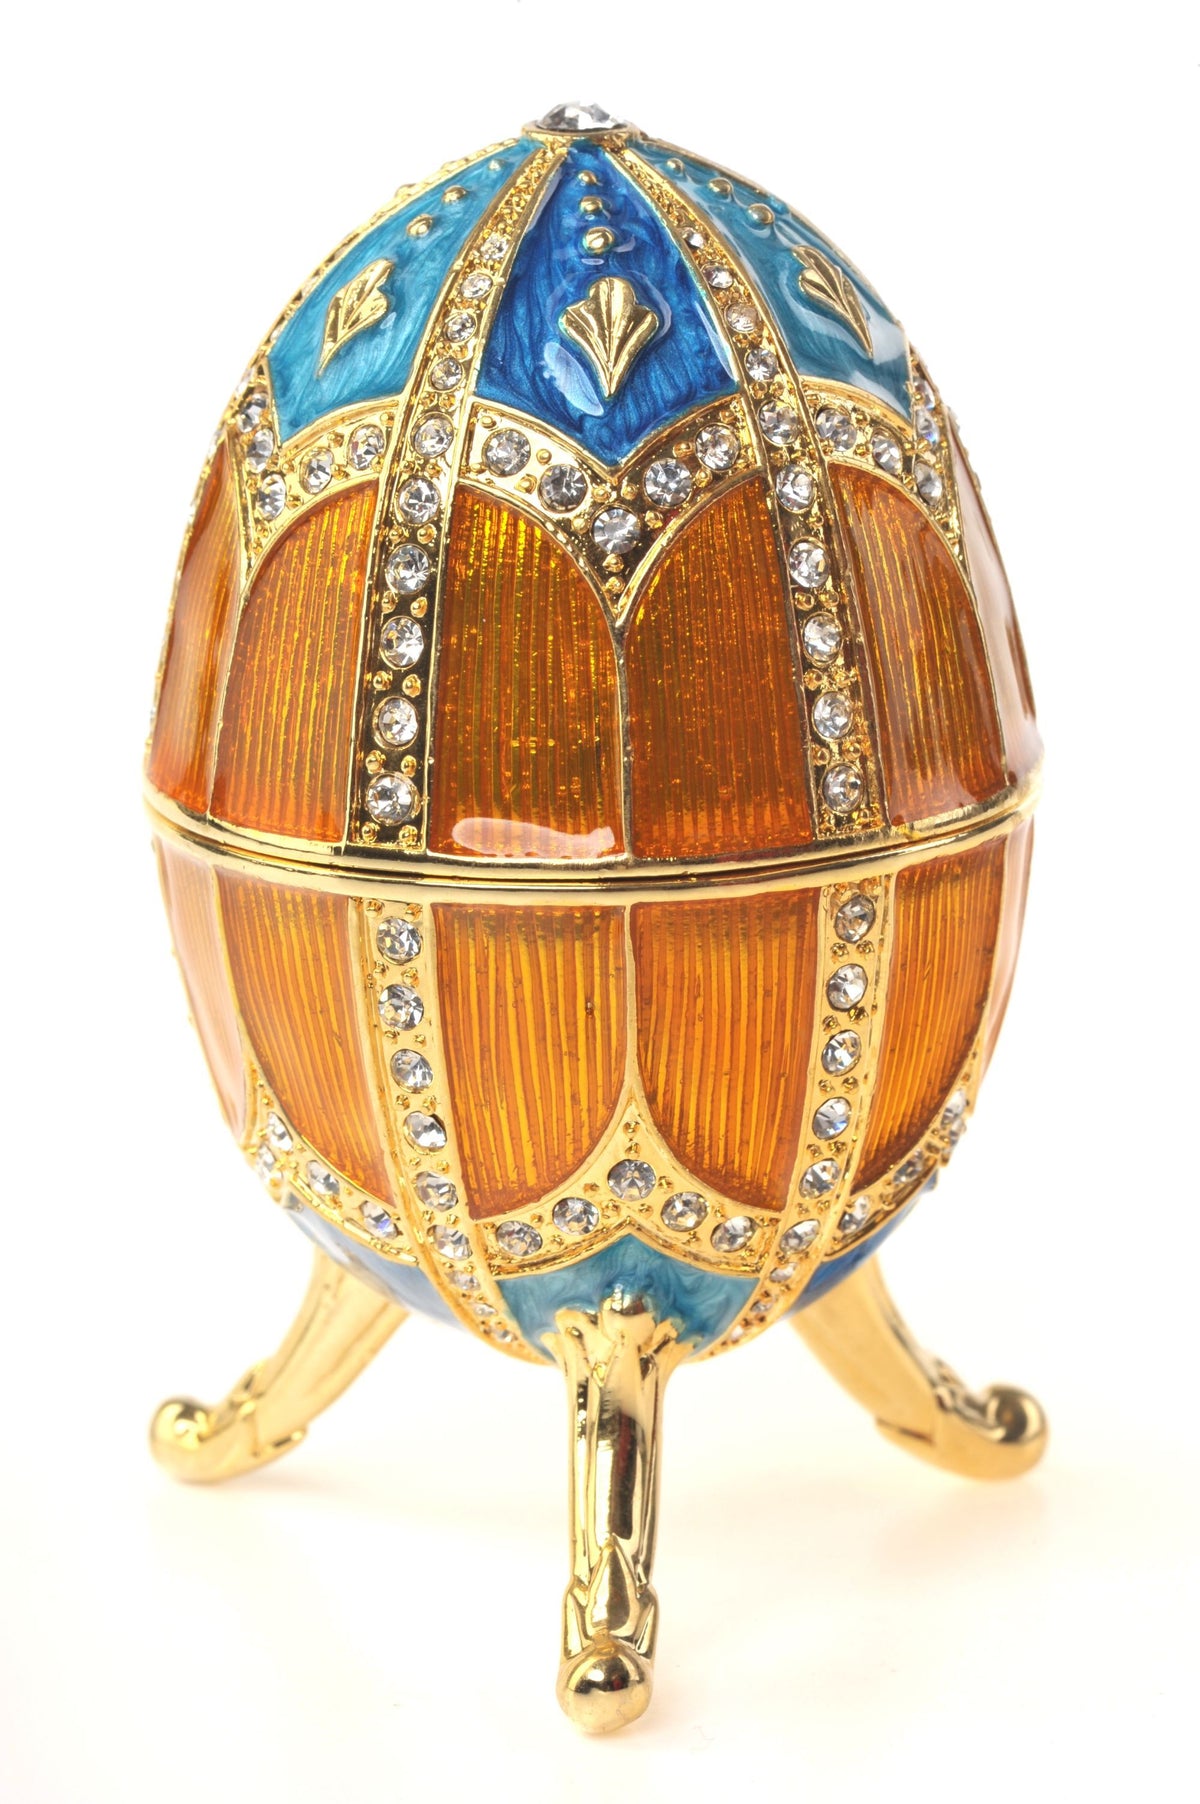 Keren Kopal Orange & Blue Faberge Egg  90.50